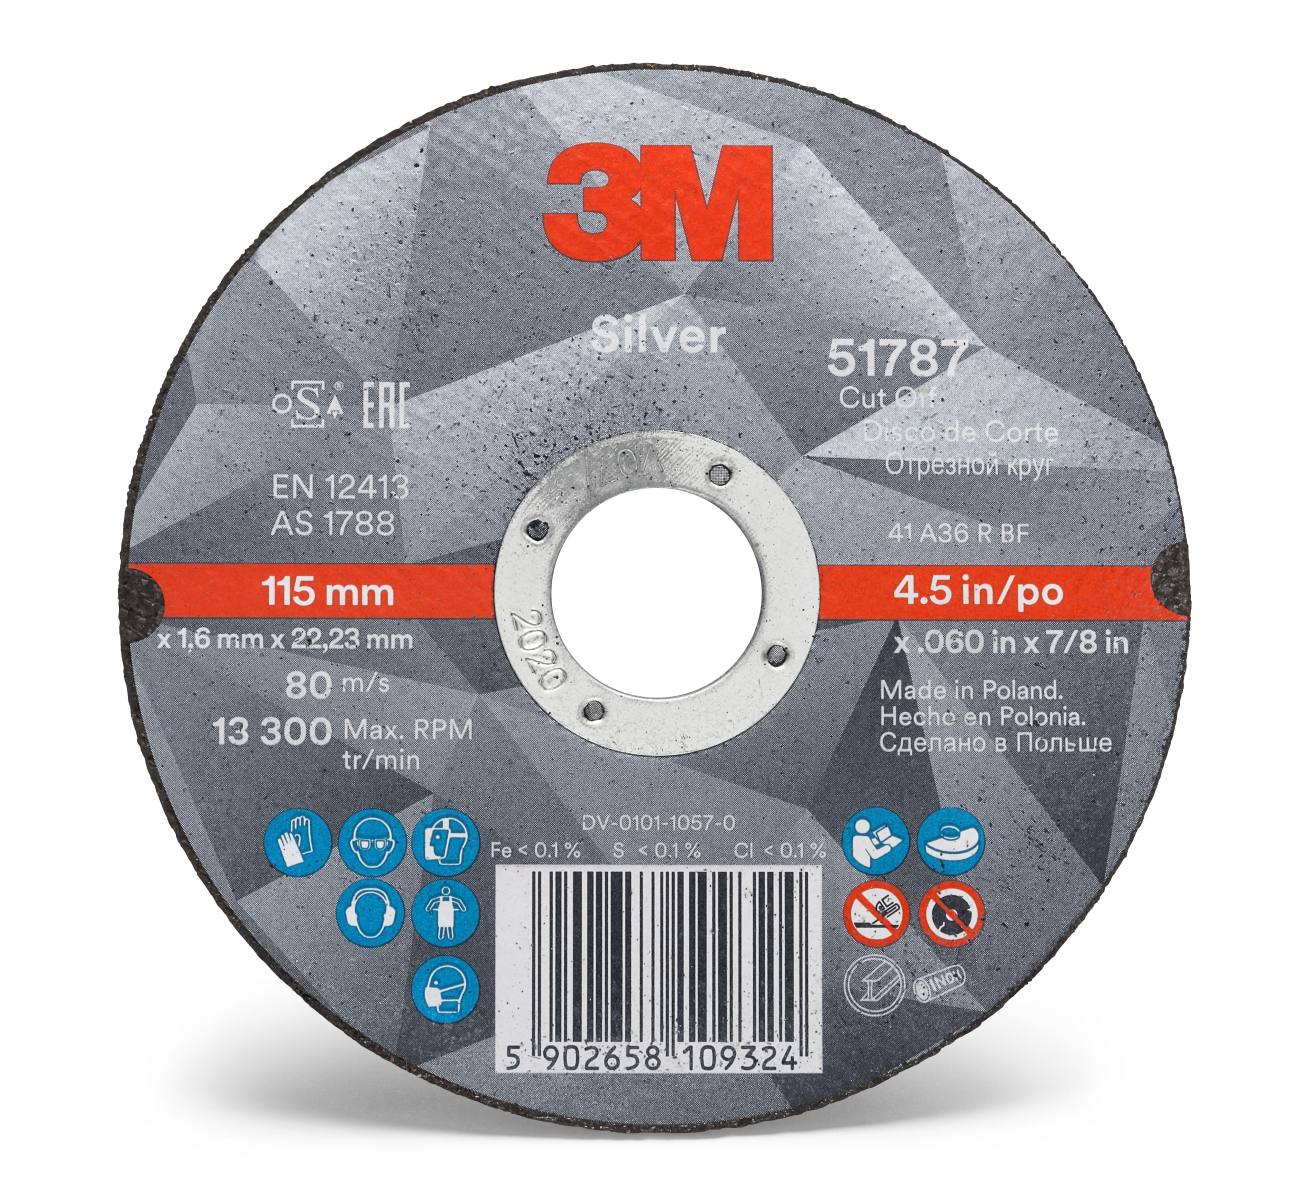 Disco da taglio 3M Silver Cut-Off, 125 mm, 2,0 mm, 22,23 mm, T41, 51795